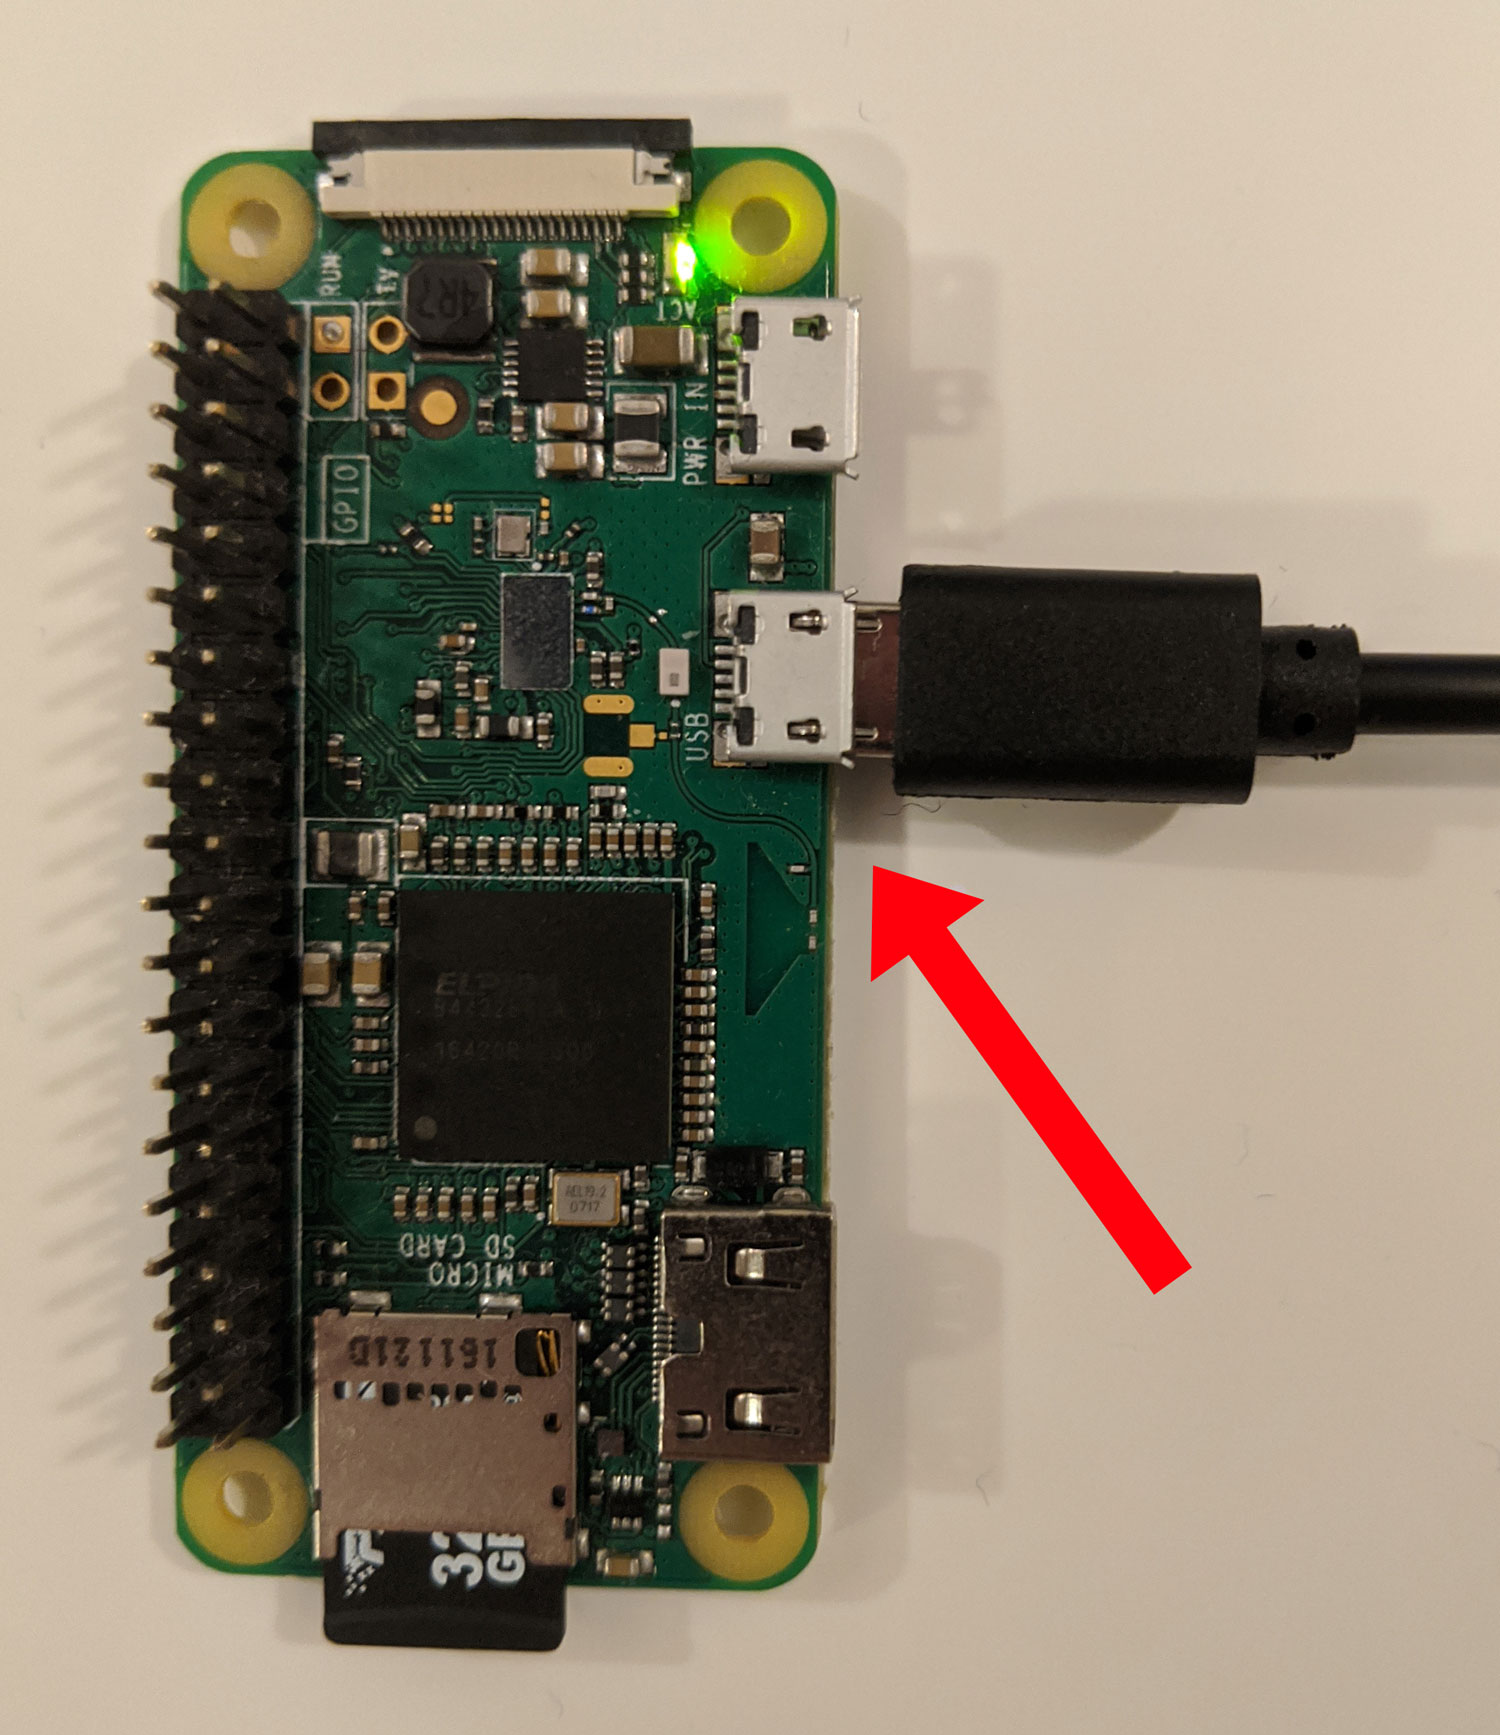 Pi Zero W with cable inserted into USB micro-USB data port